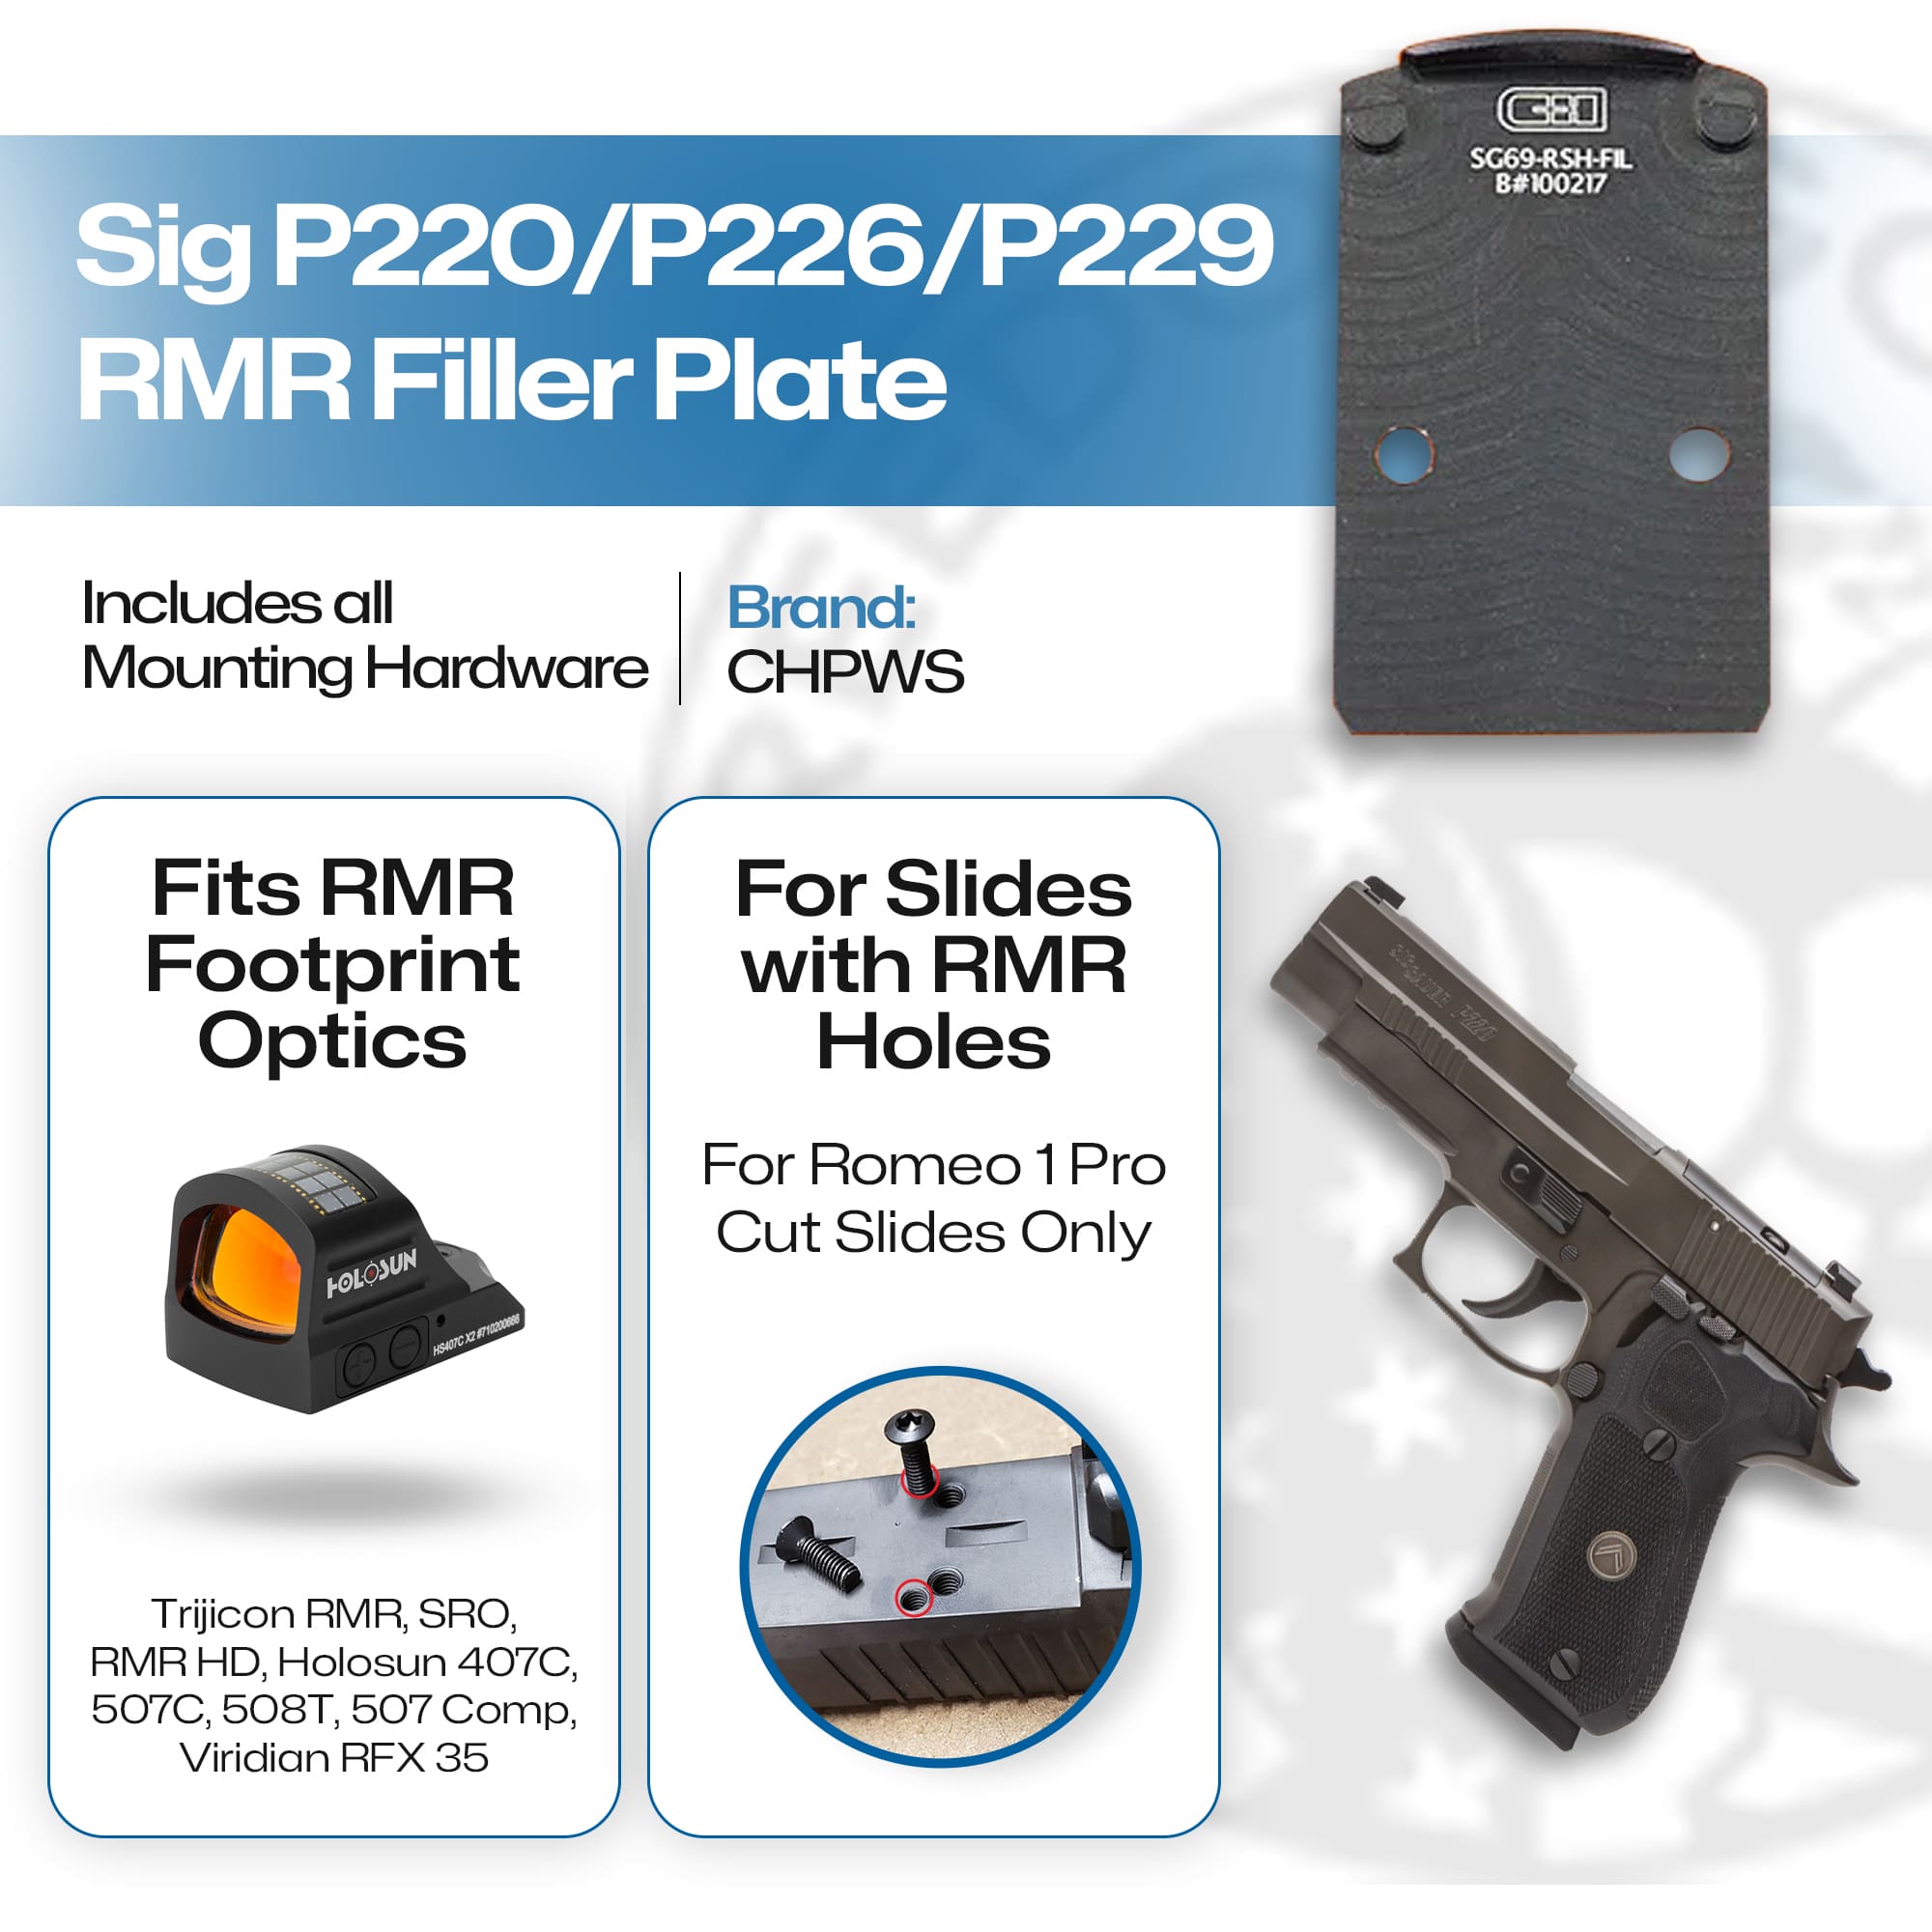 Sig P226/P229 Filler Plate for Romeo 1 Pro Cut Slides Only - CHPWS - SG69-RSH-FIL